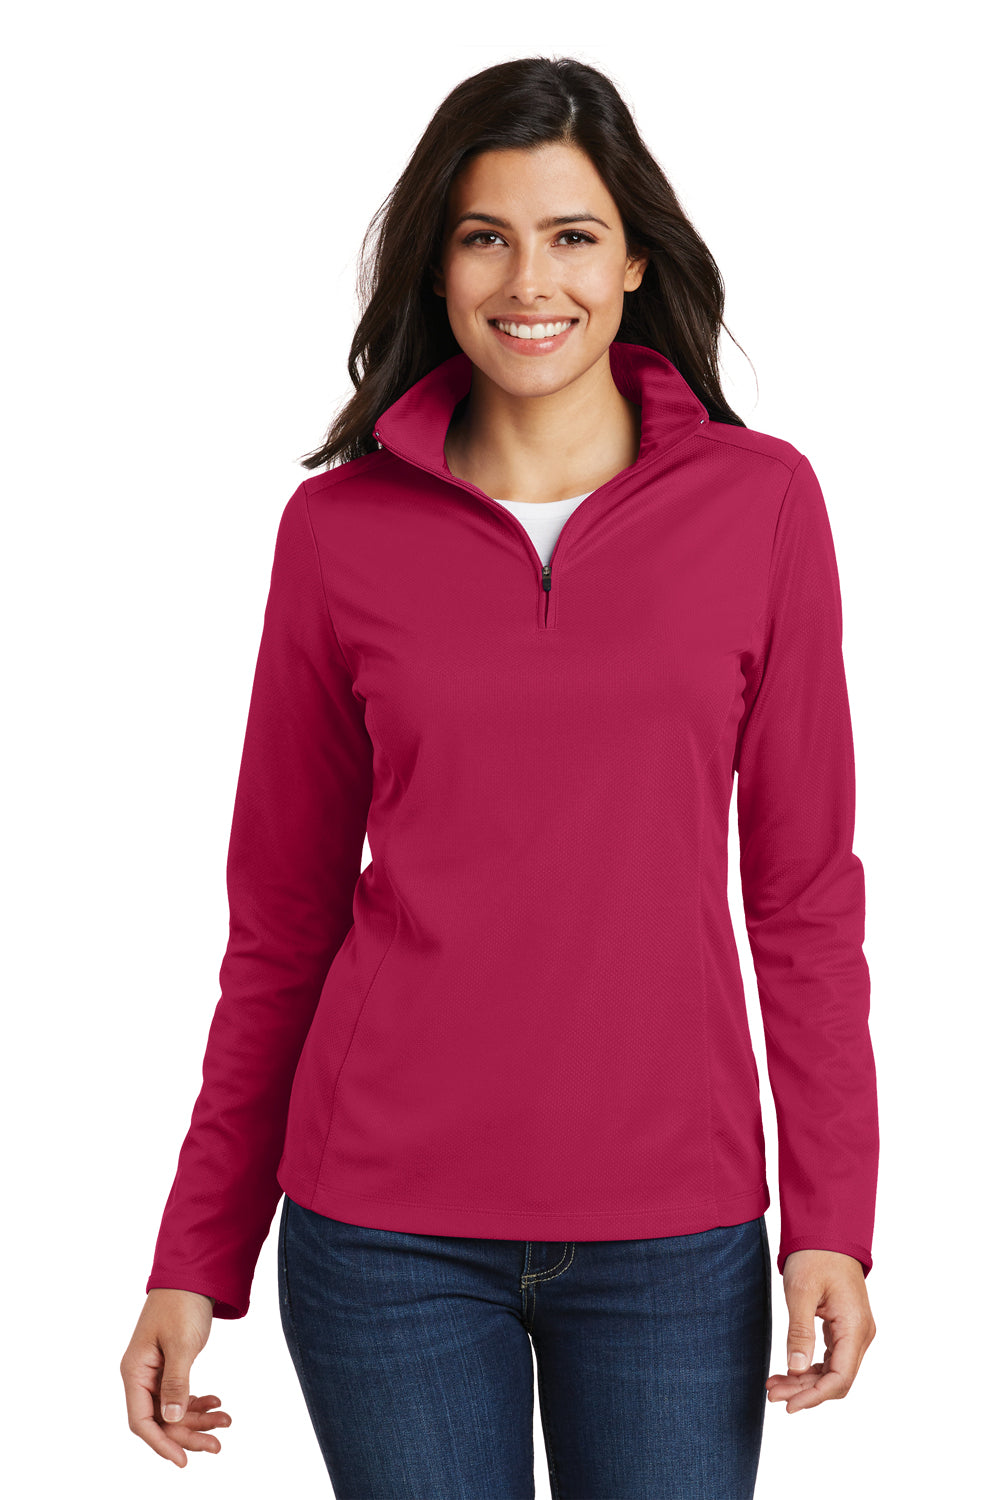 Port Authority L806 Womens Moisture Wicking 1/4 Zip Sweatshirt Fuchsia Pink Front